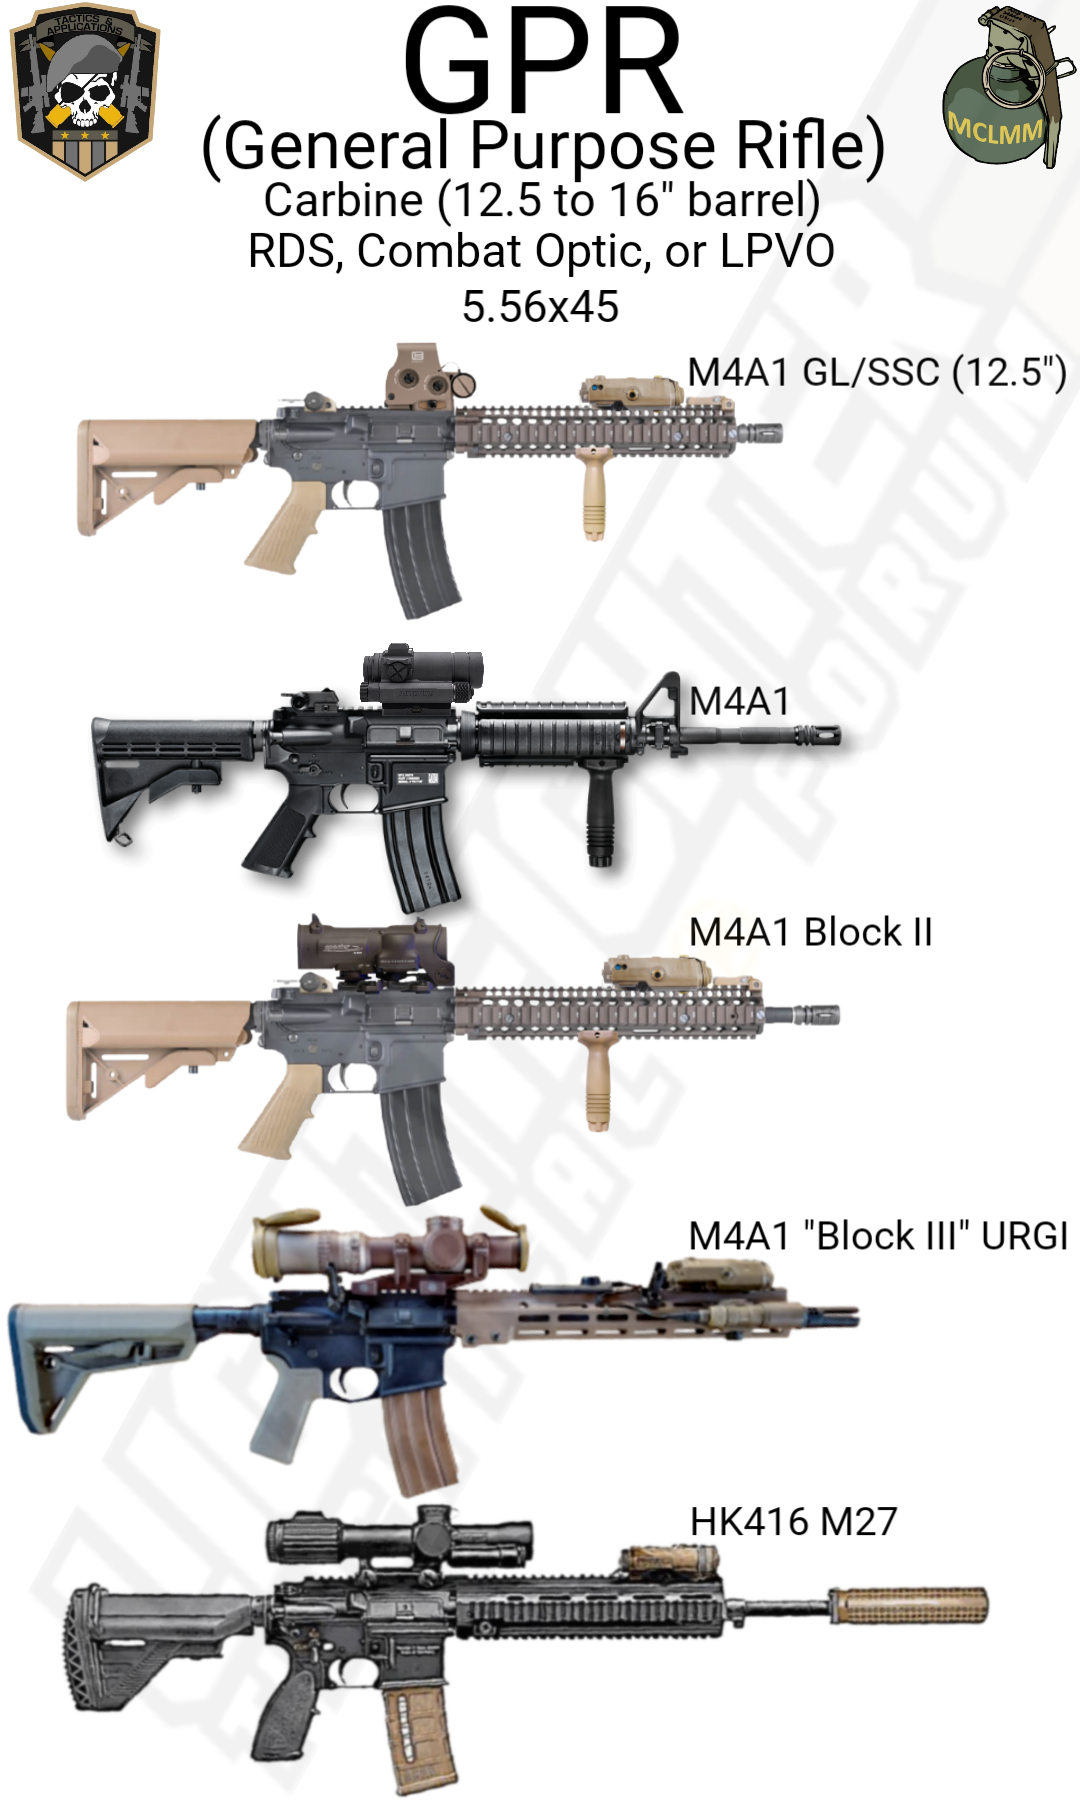 Types of General, Purpose Rifle (GPR)